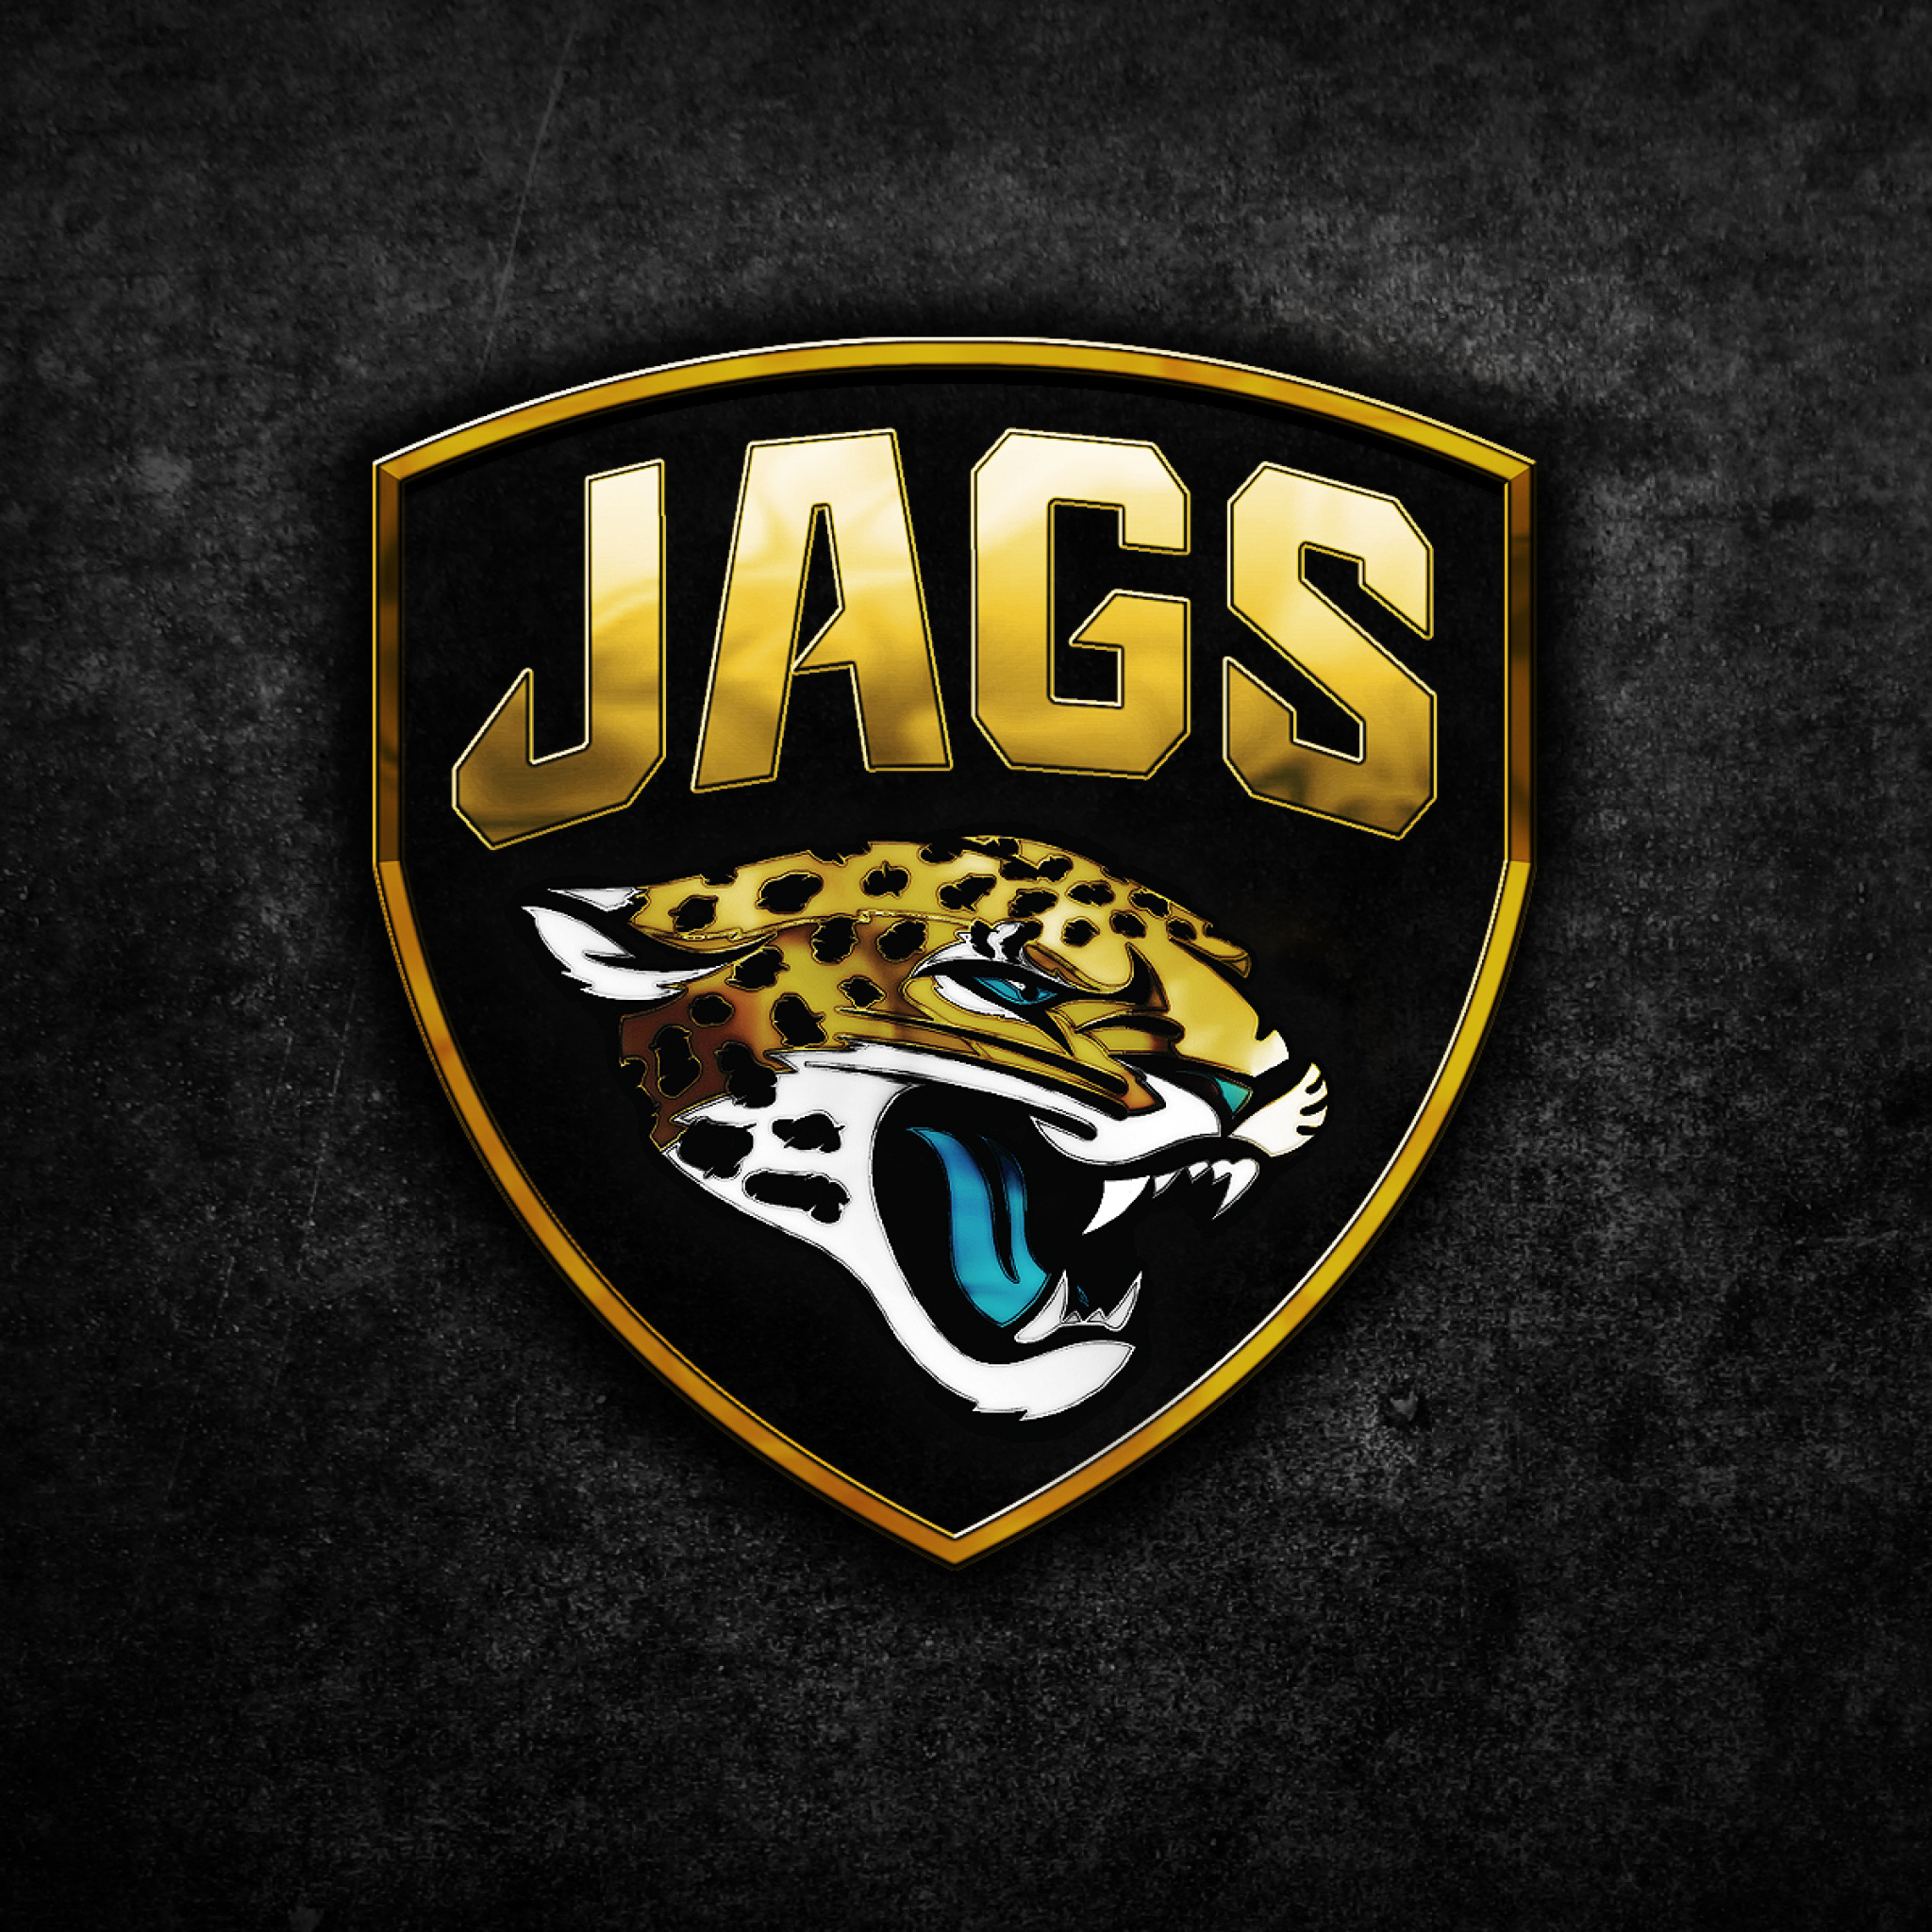 Jacksonville Jaguars NFL Team Logo wallpaper 2048x2048